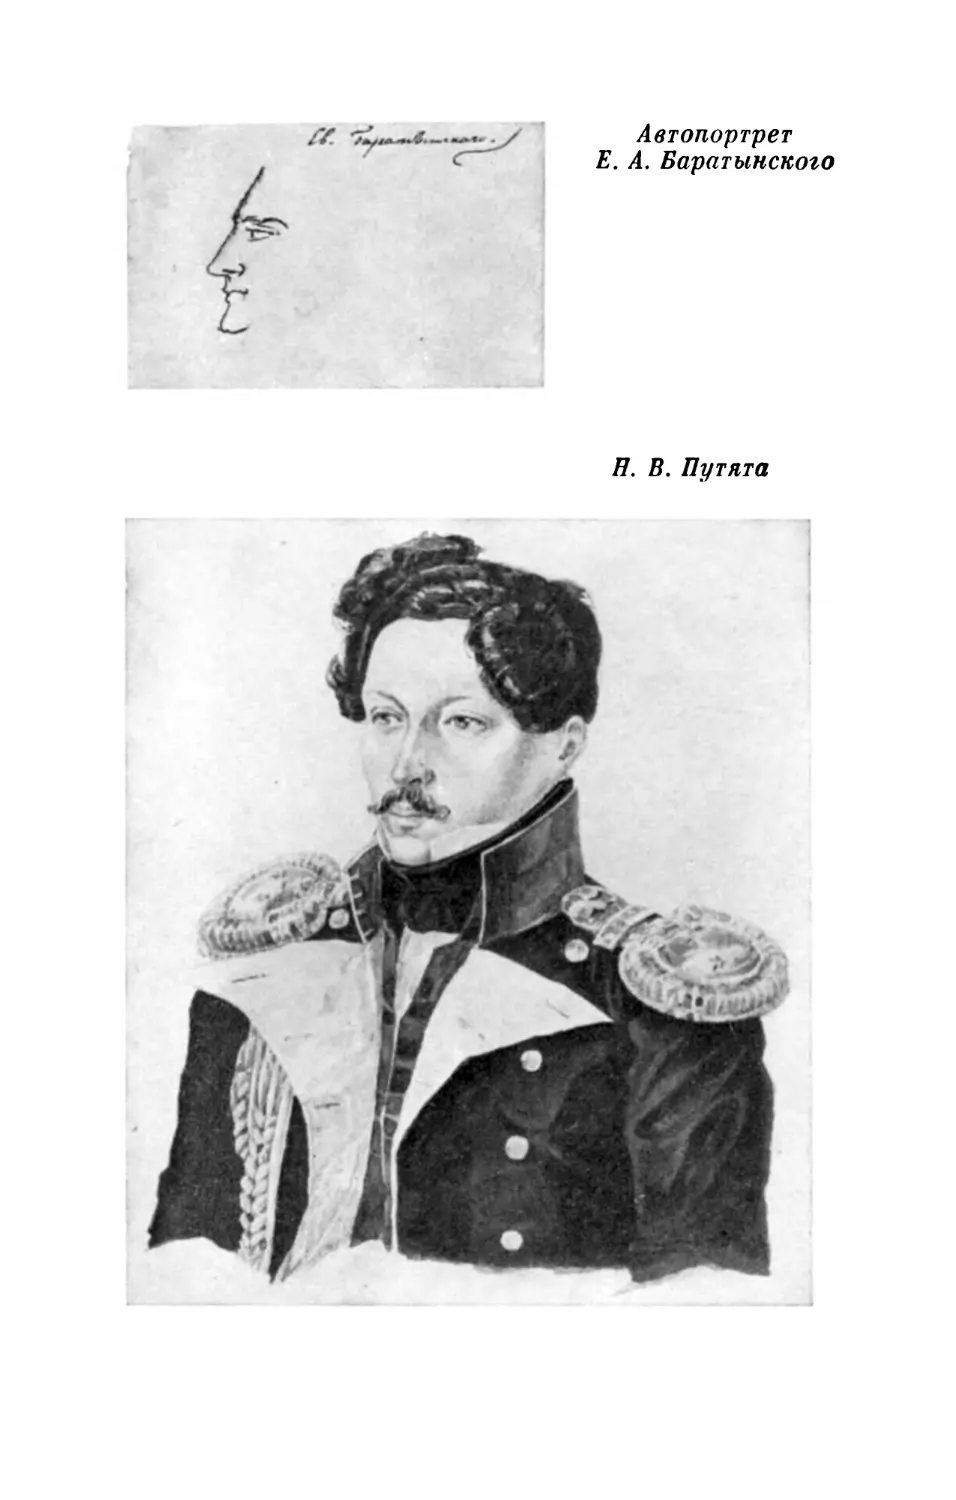 Автопортрет Е. А. Баратынского; Н. В. Путята